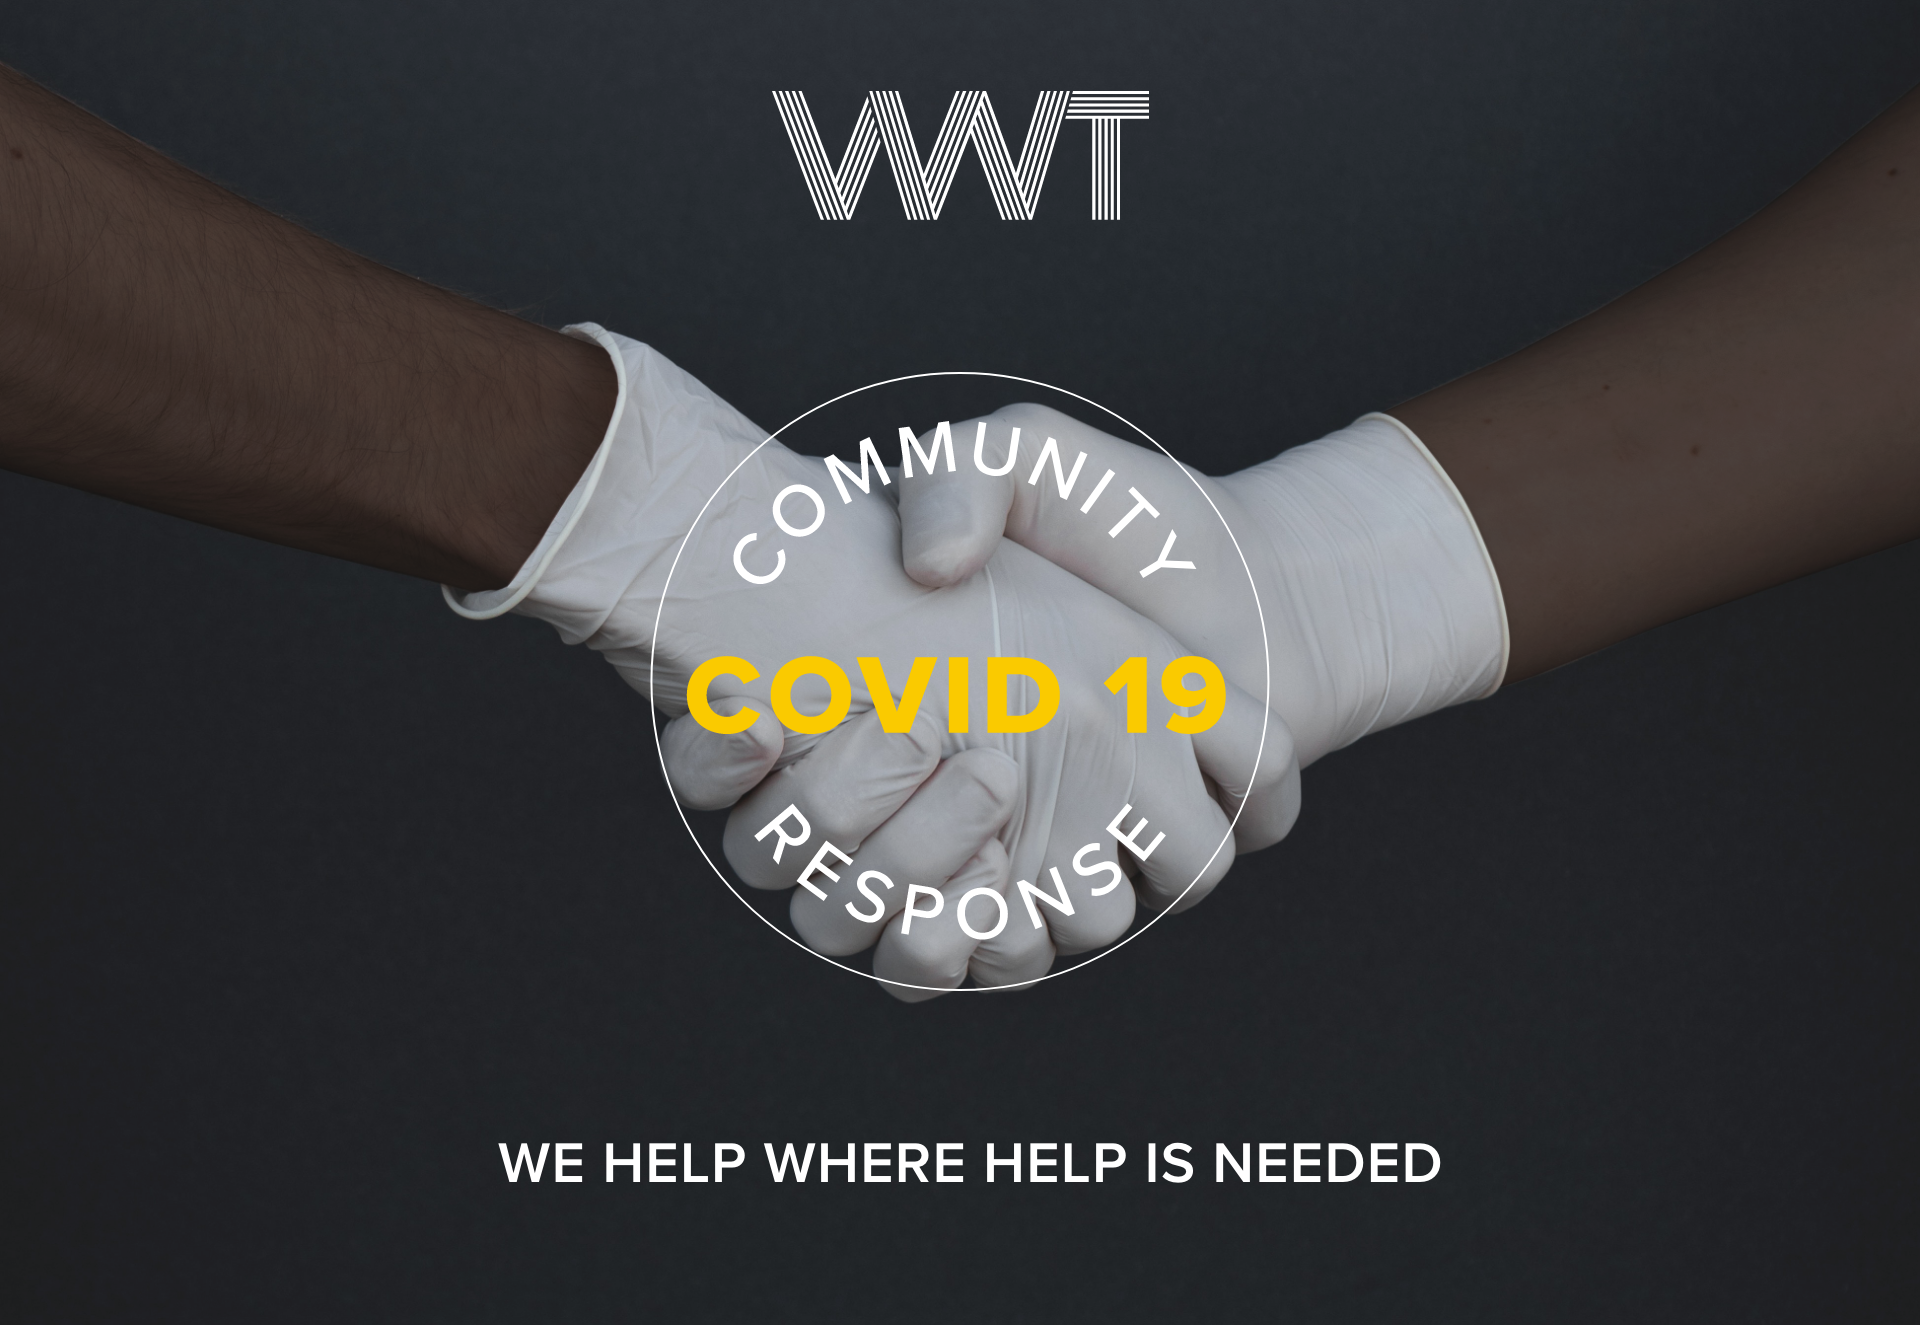 VWT Covid Response